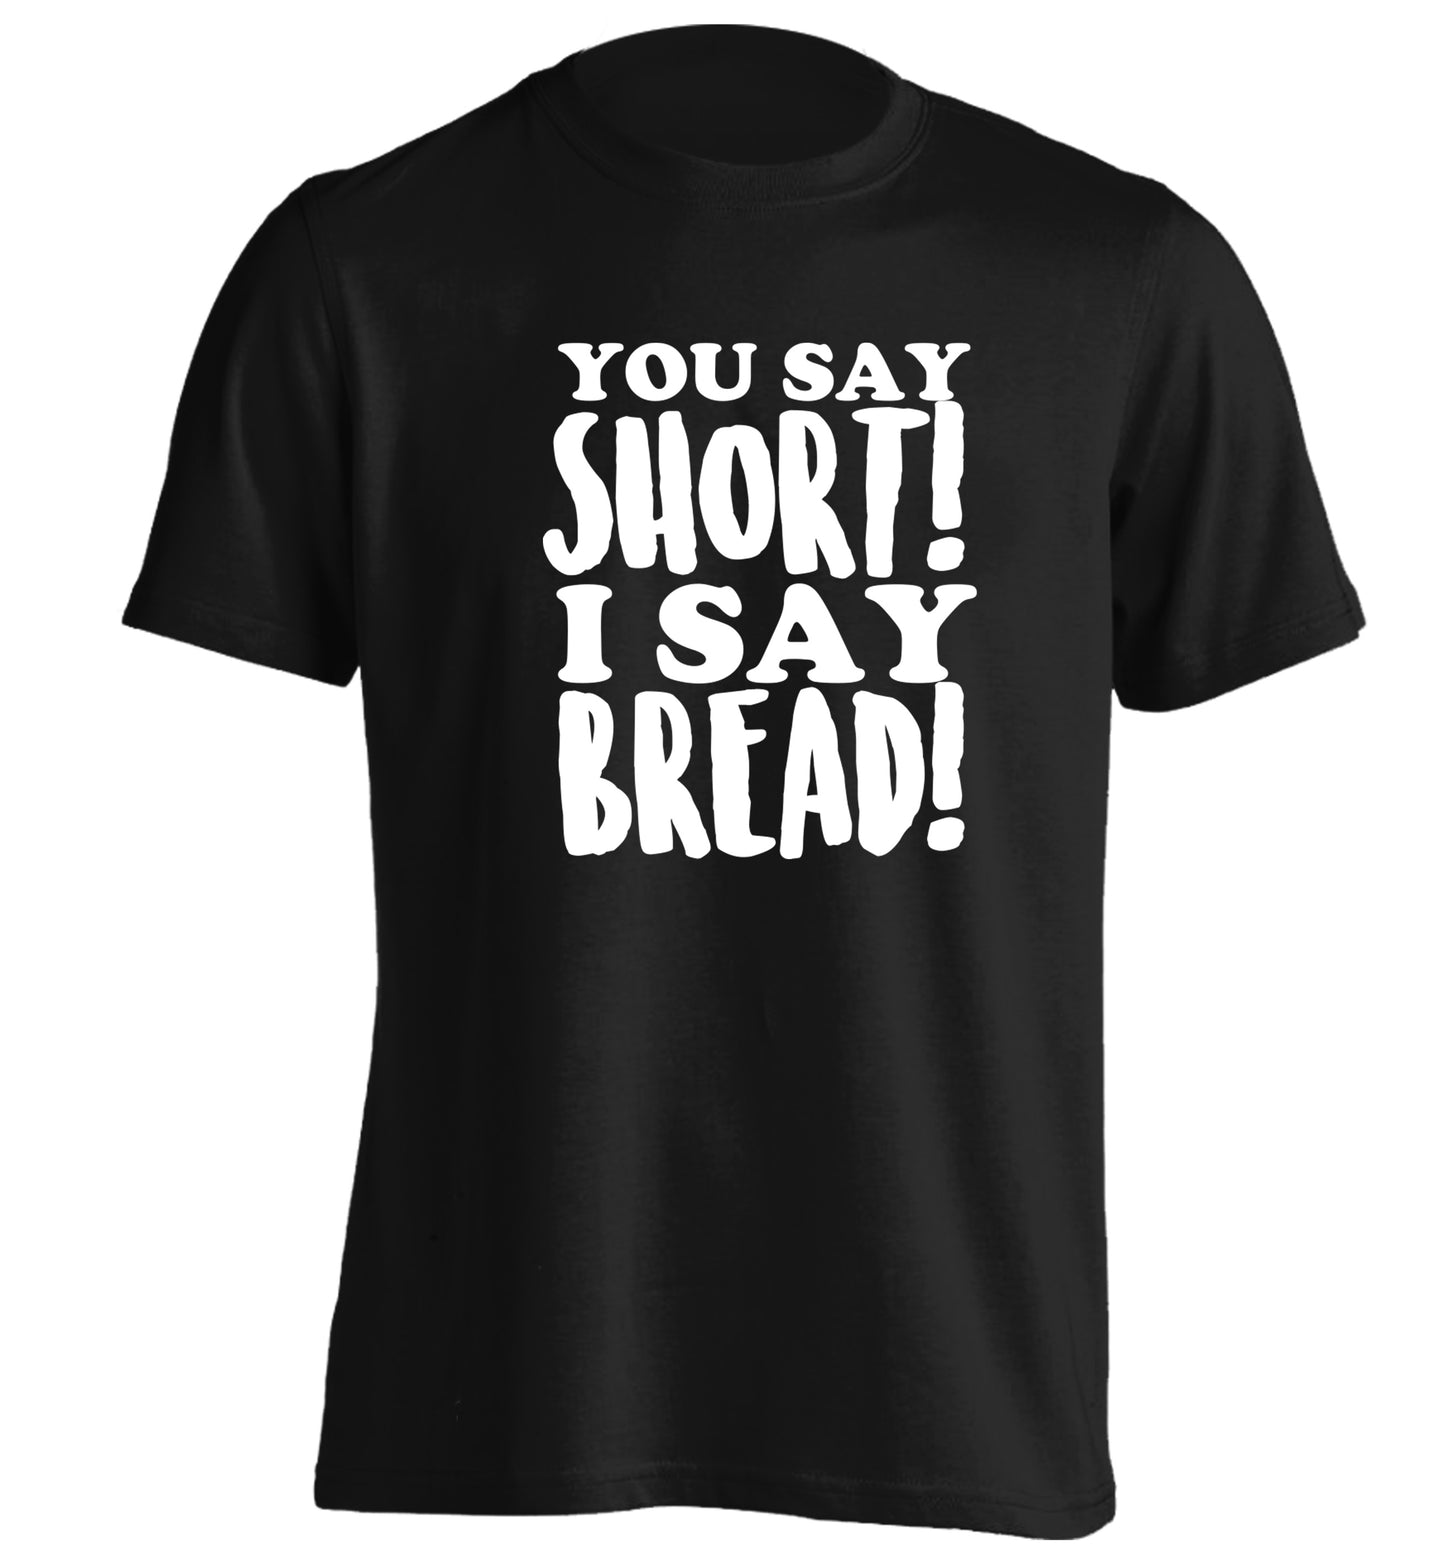 You say short I say bread! adults unisex black Tshirt 2XL